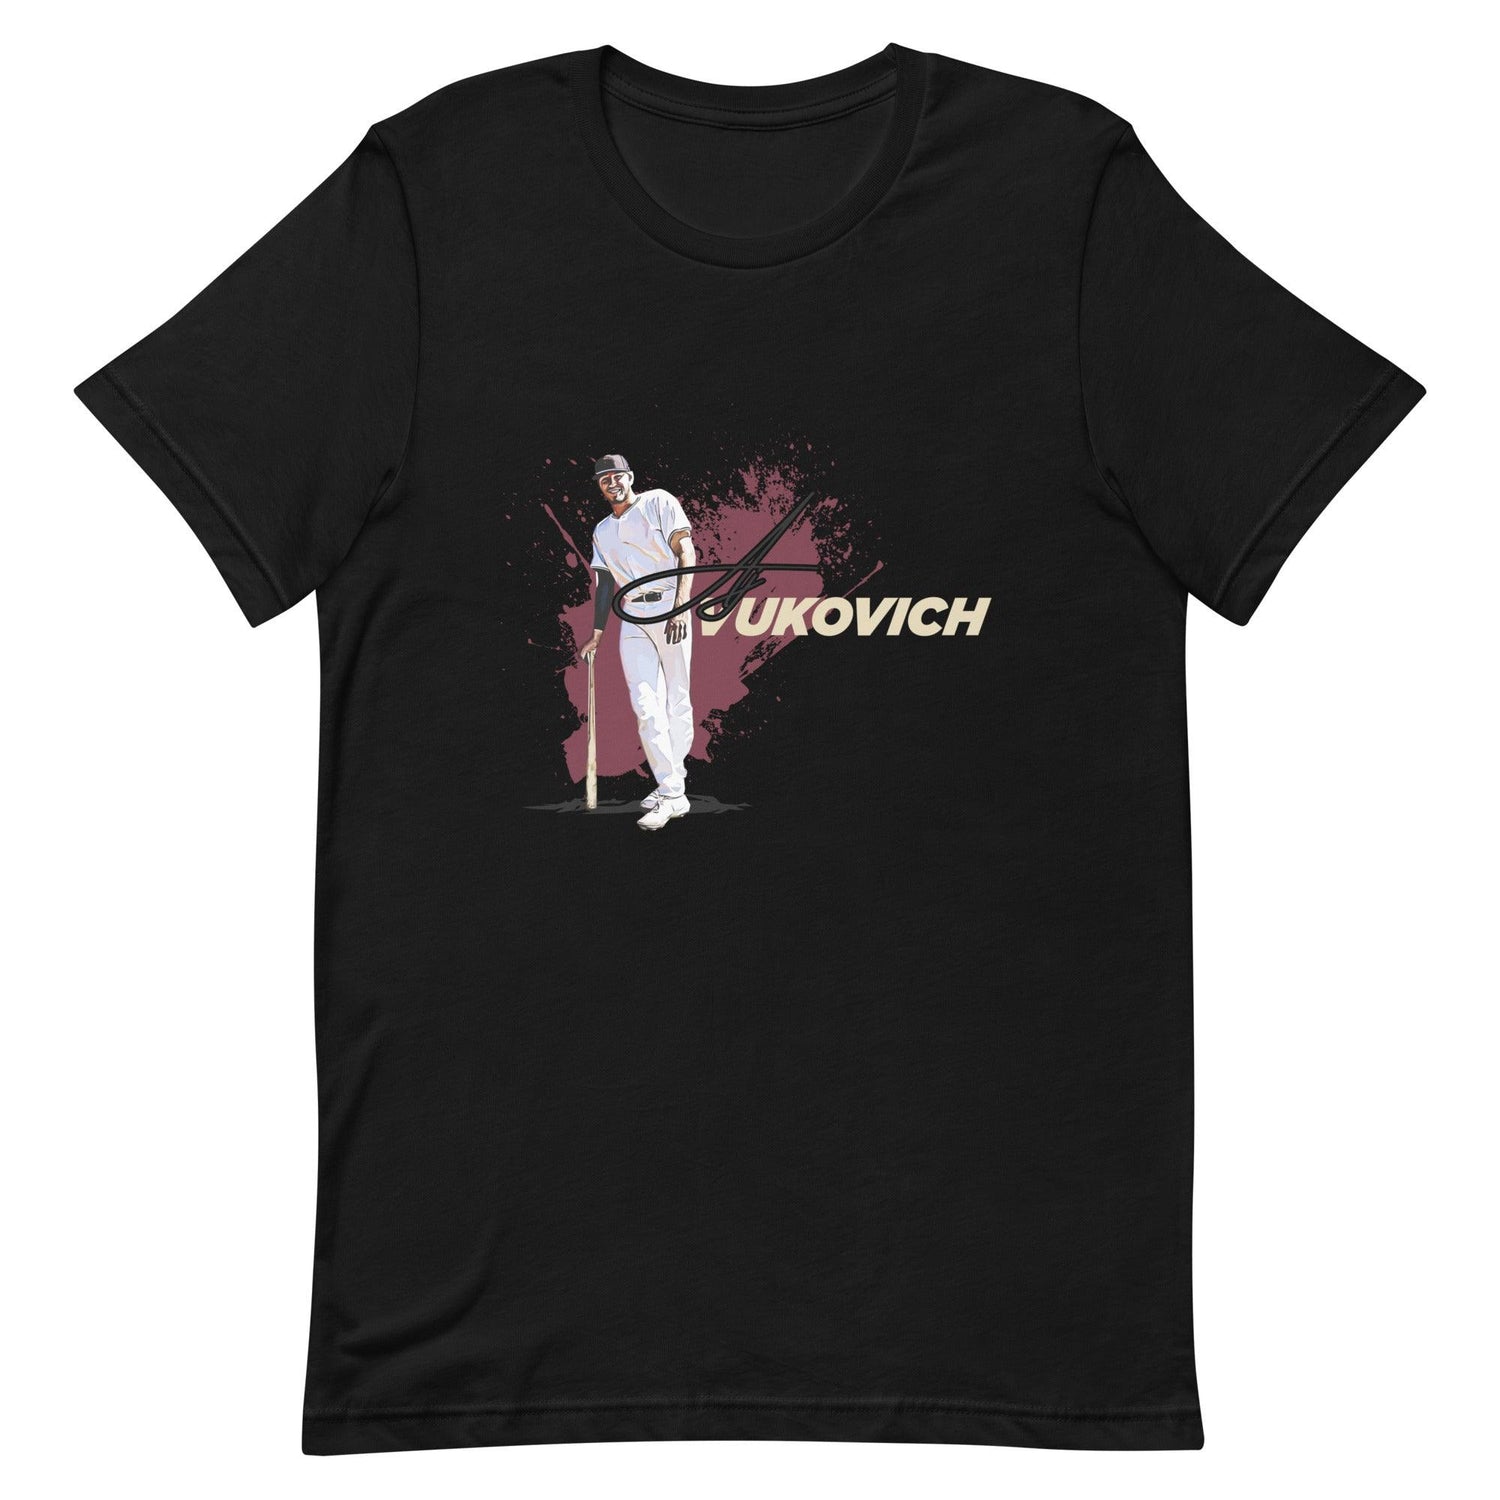 AJ Vukovich “Primetime” t-shirt - Fan Arch